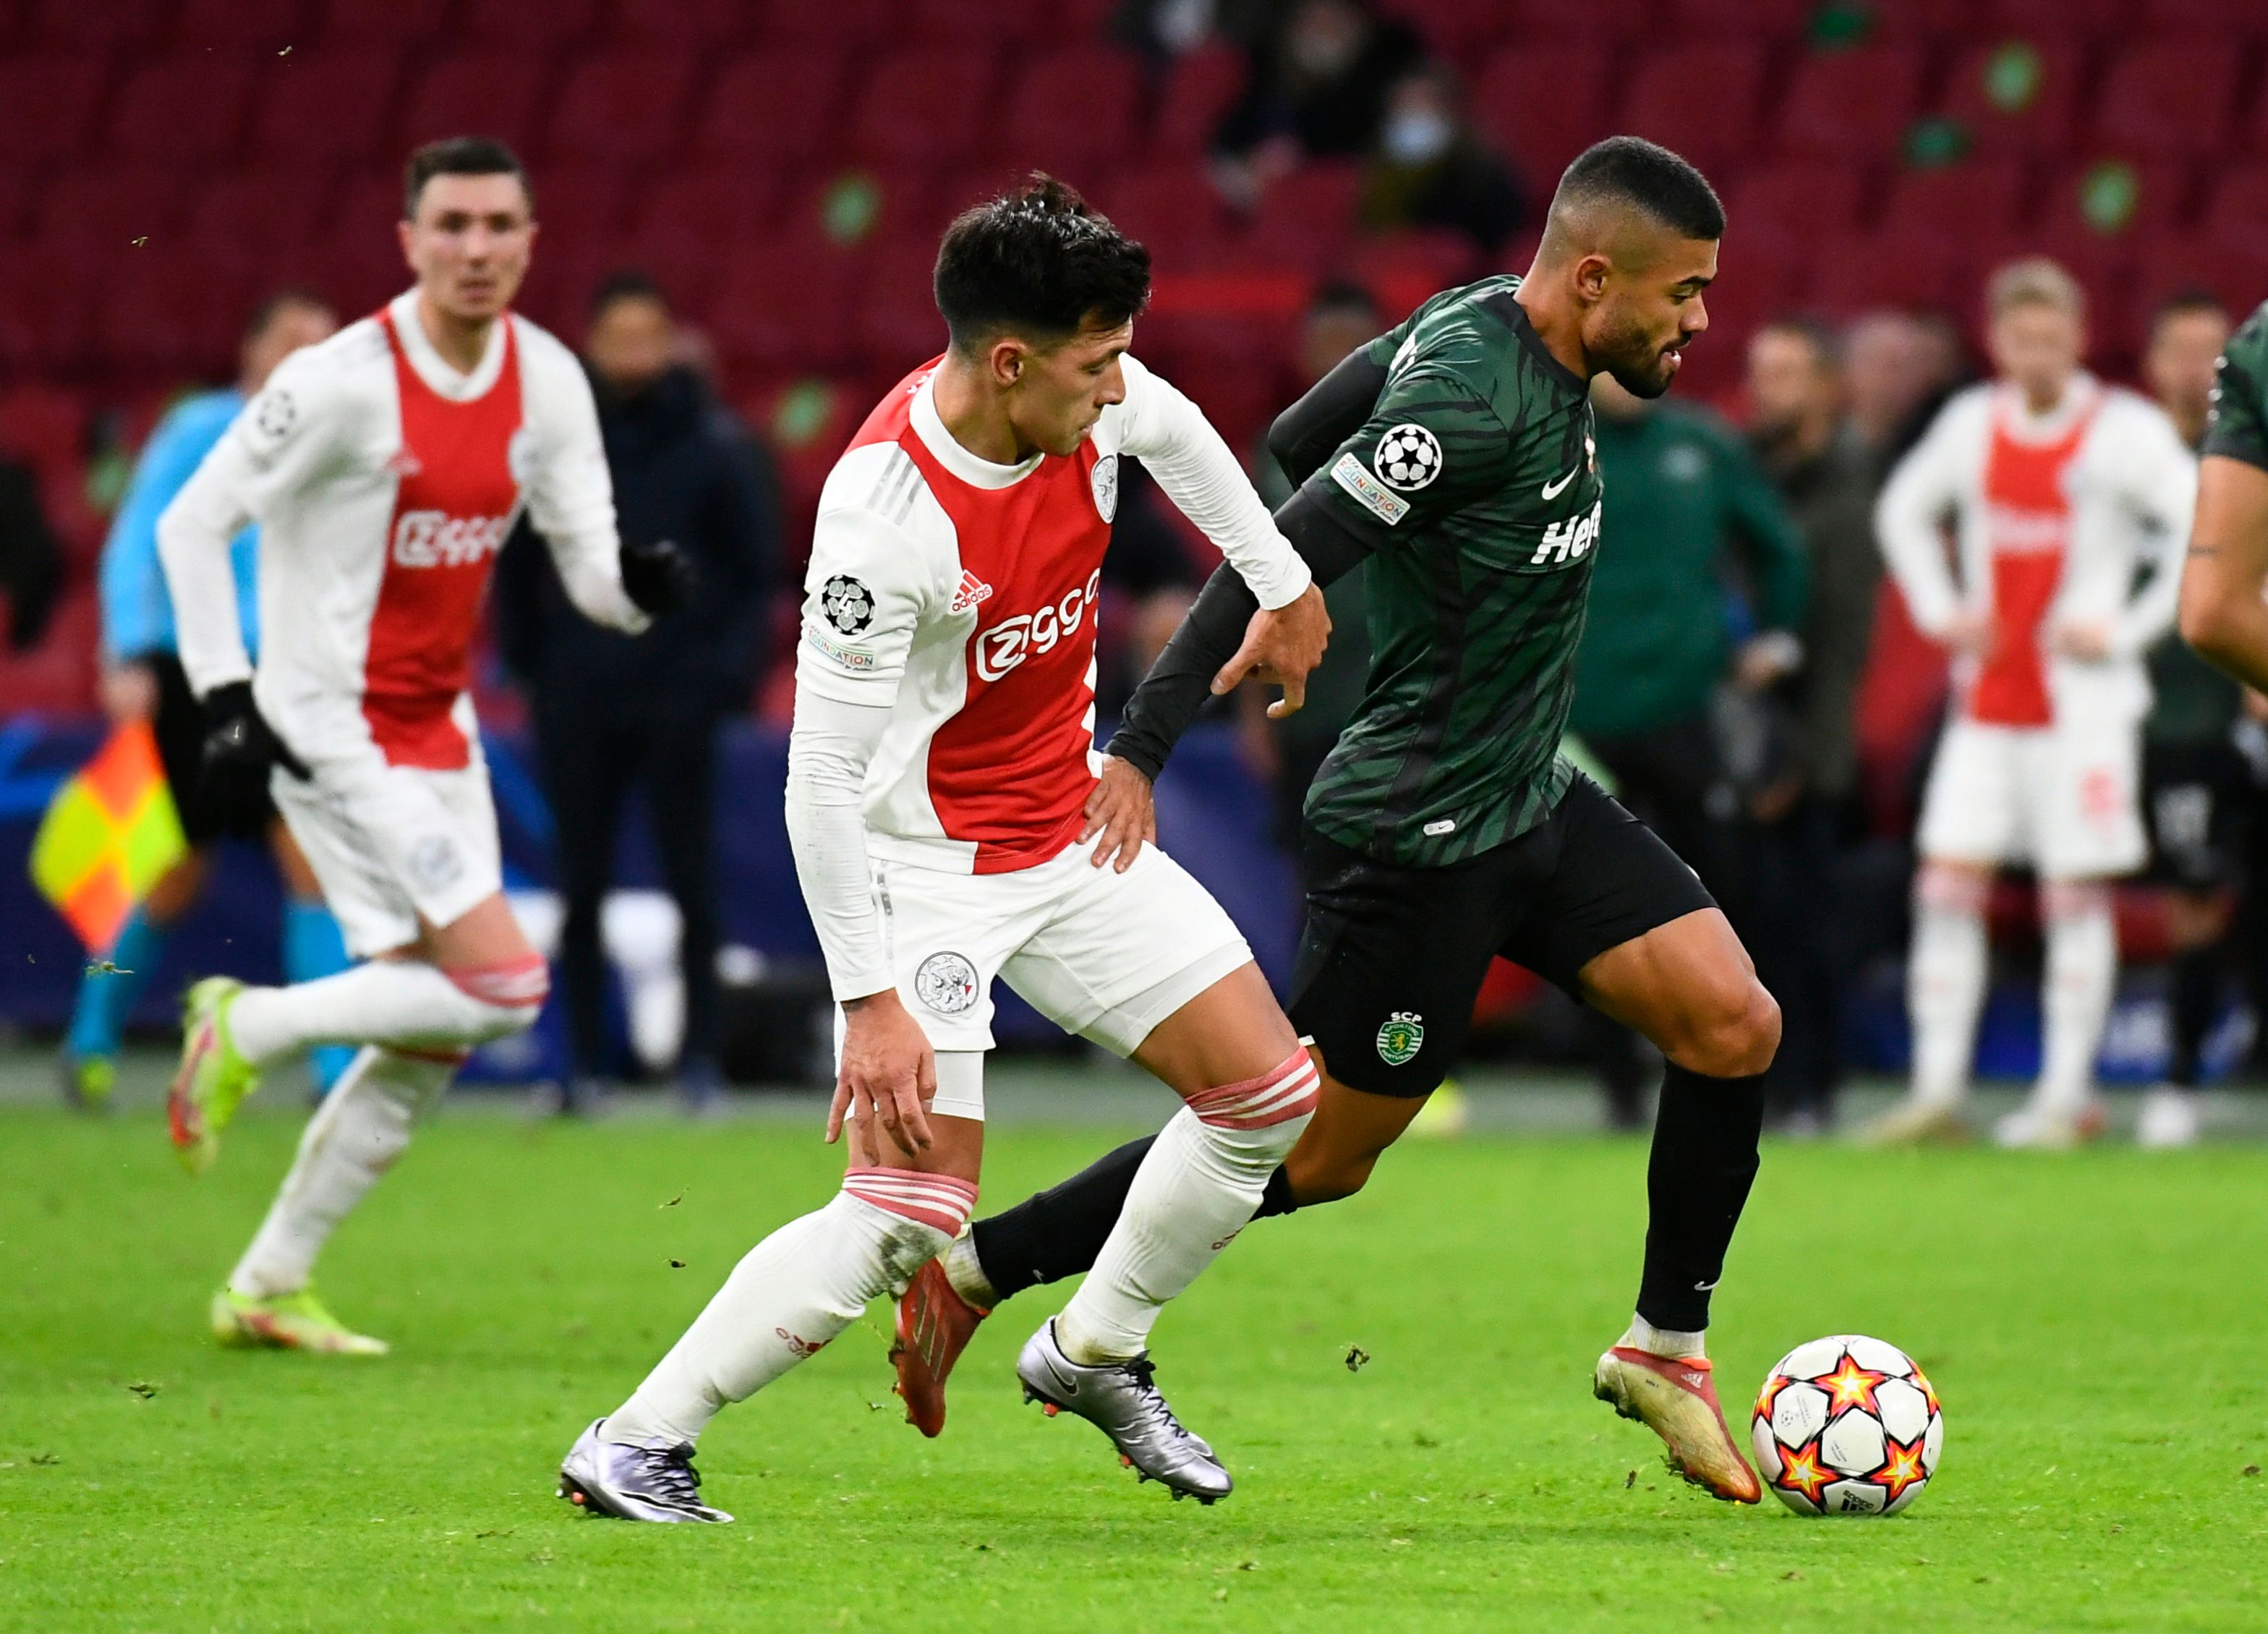 Ajax's Martinez in action.